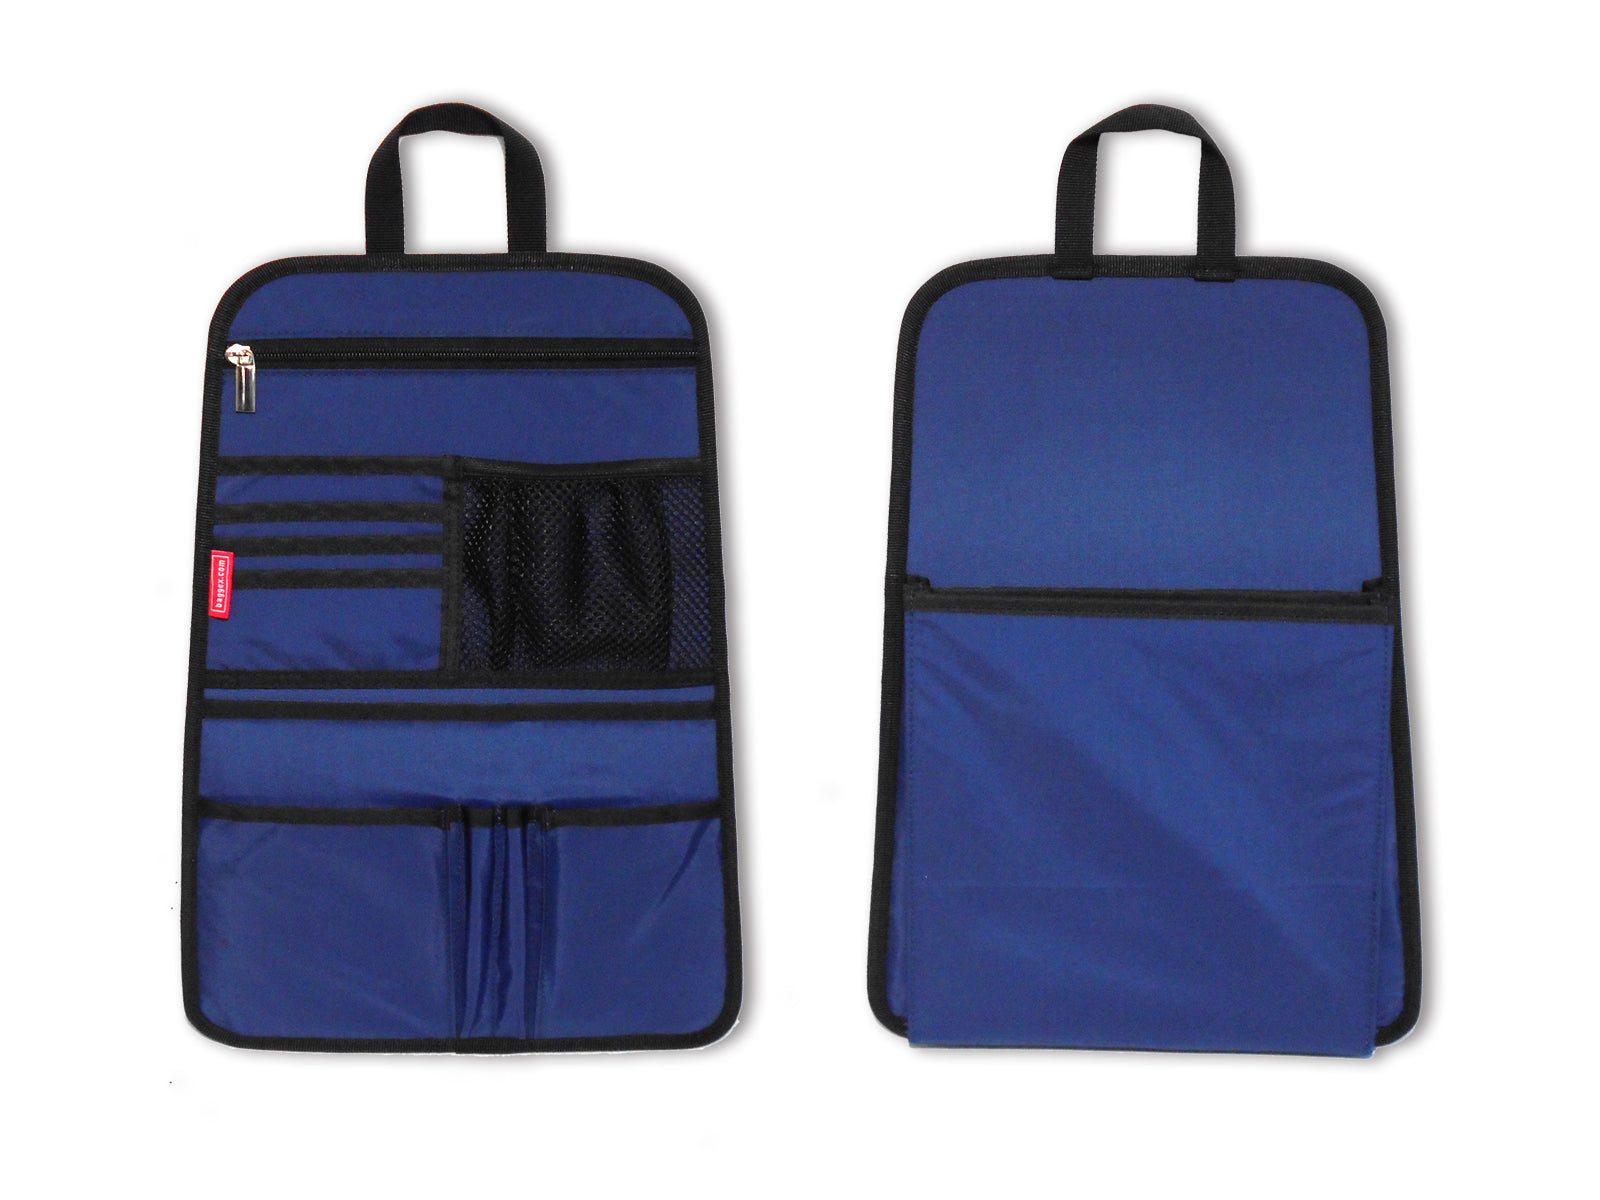 Surblue Backpack Organizer Insert Liner Hanging Travel Rucksack and Handbag  Insert Pocket, High-capa…See more Surblue Backpack Organizer Insert Liner